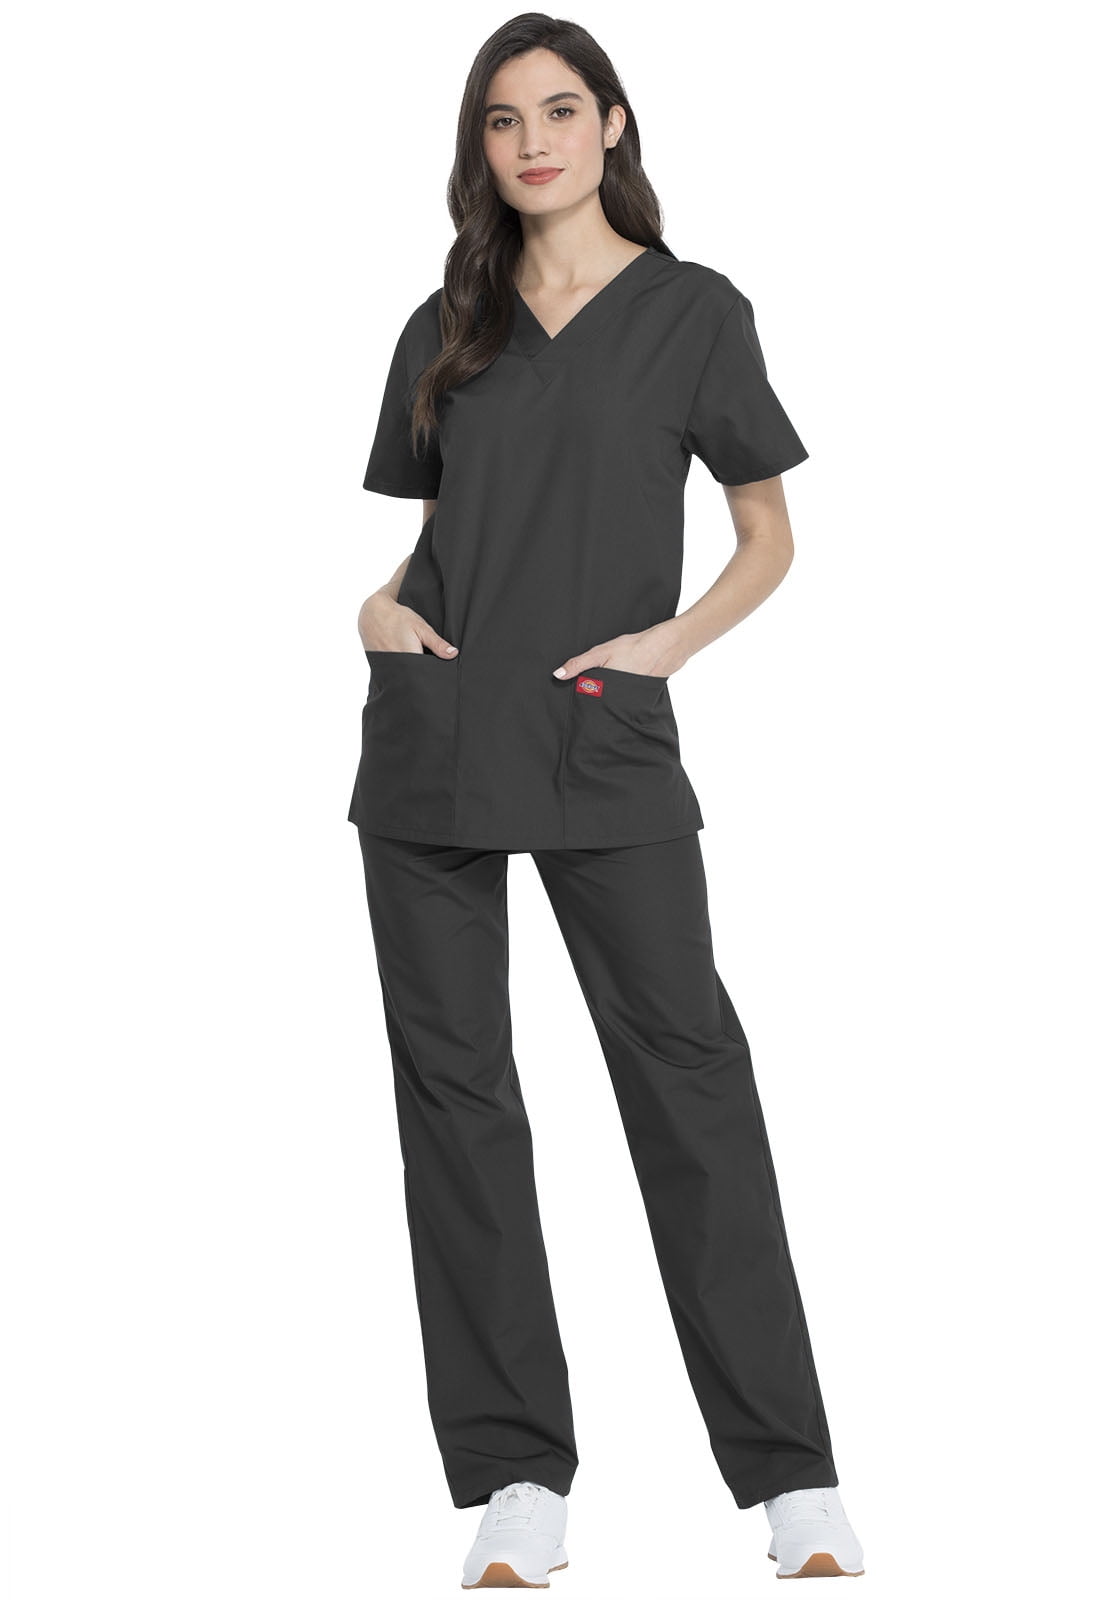 Dickies Unisex Black Scrub Set Medical V-Neck Top Drawstring Pants Size XS to XL 